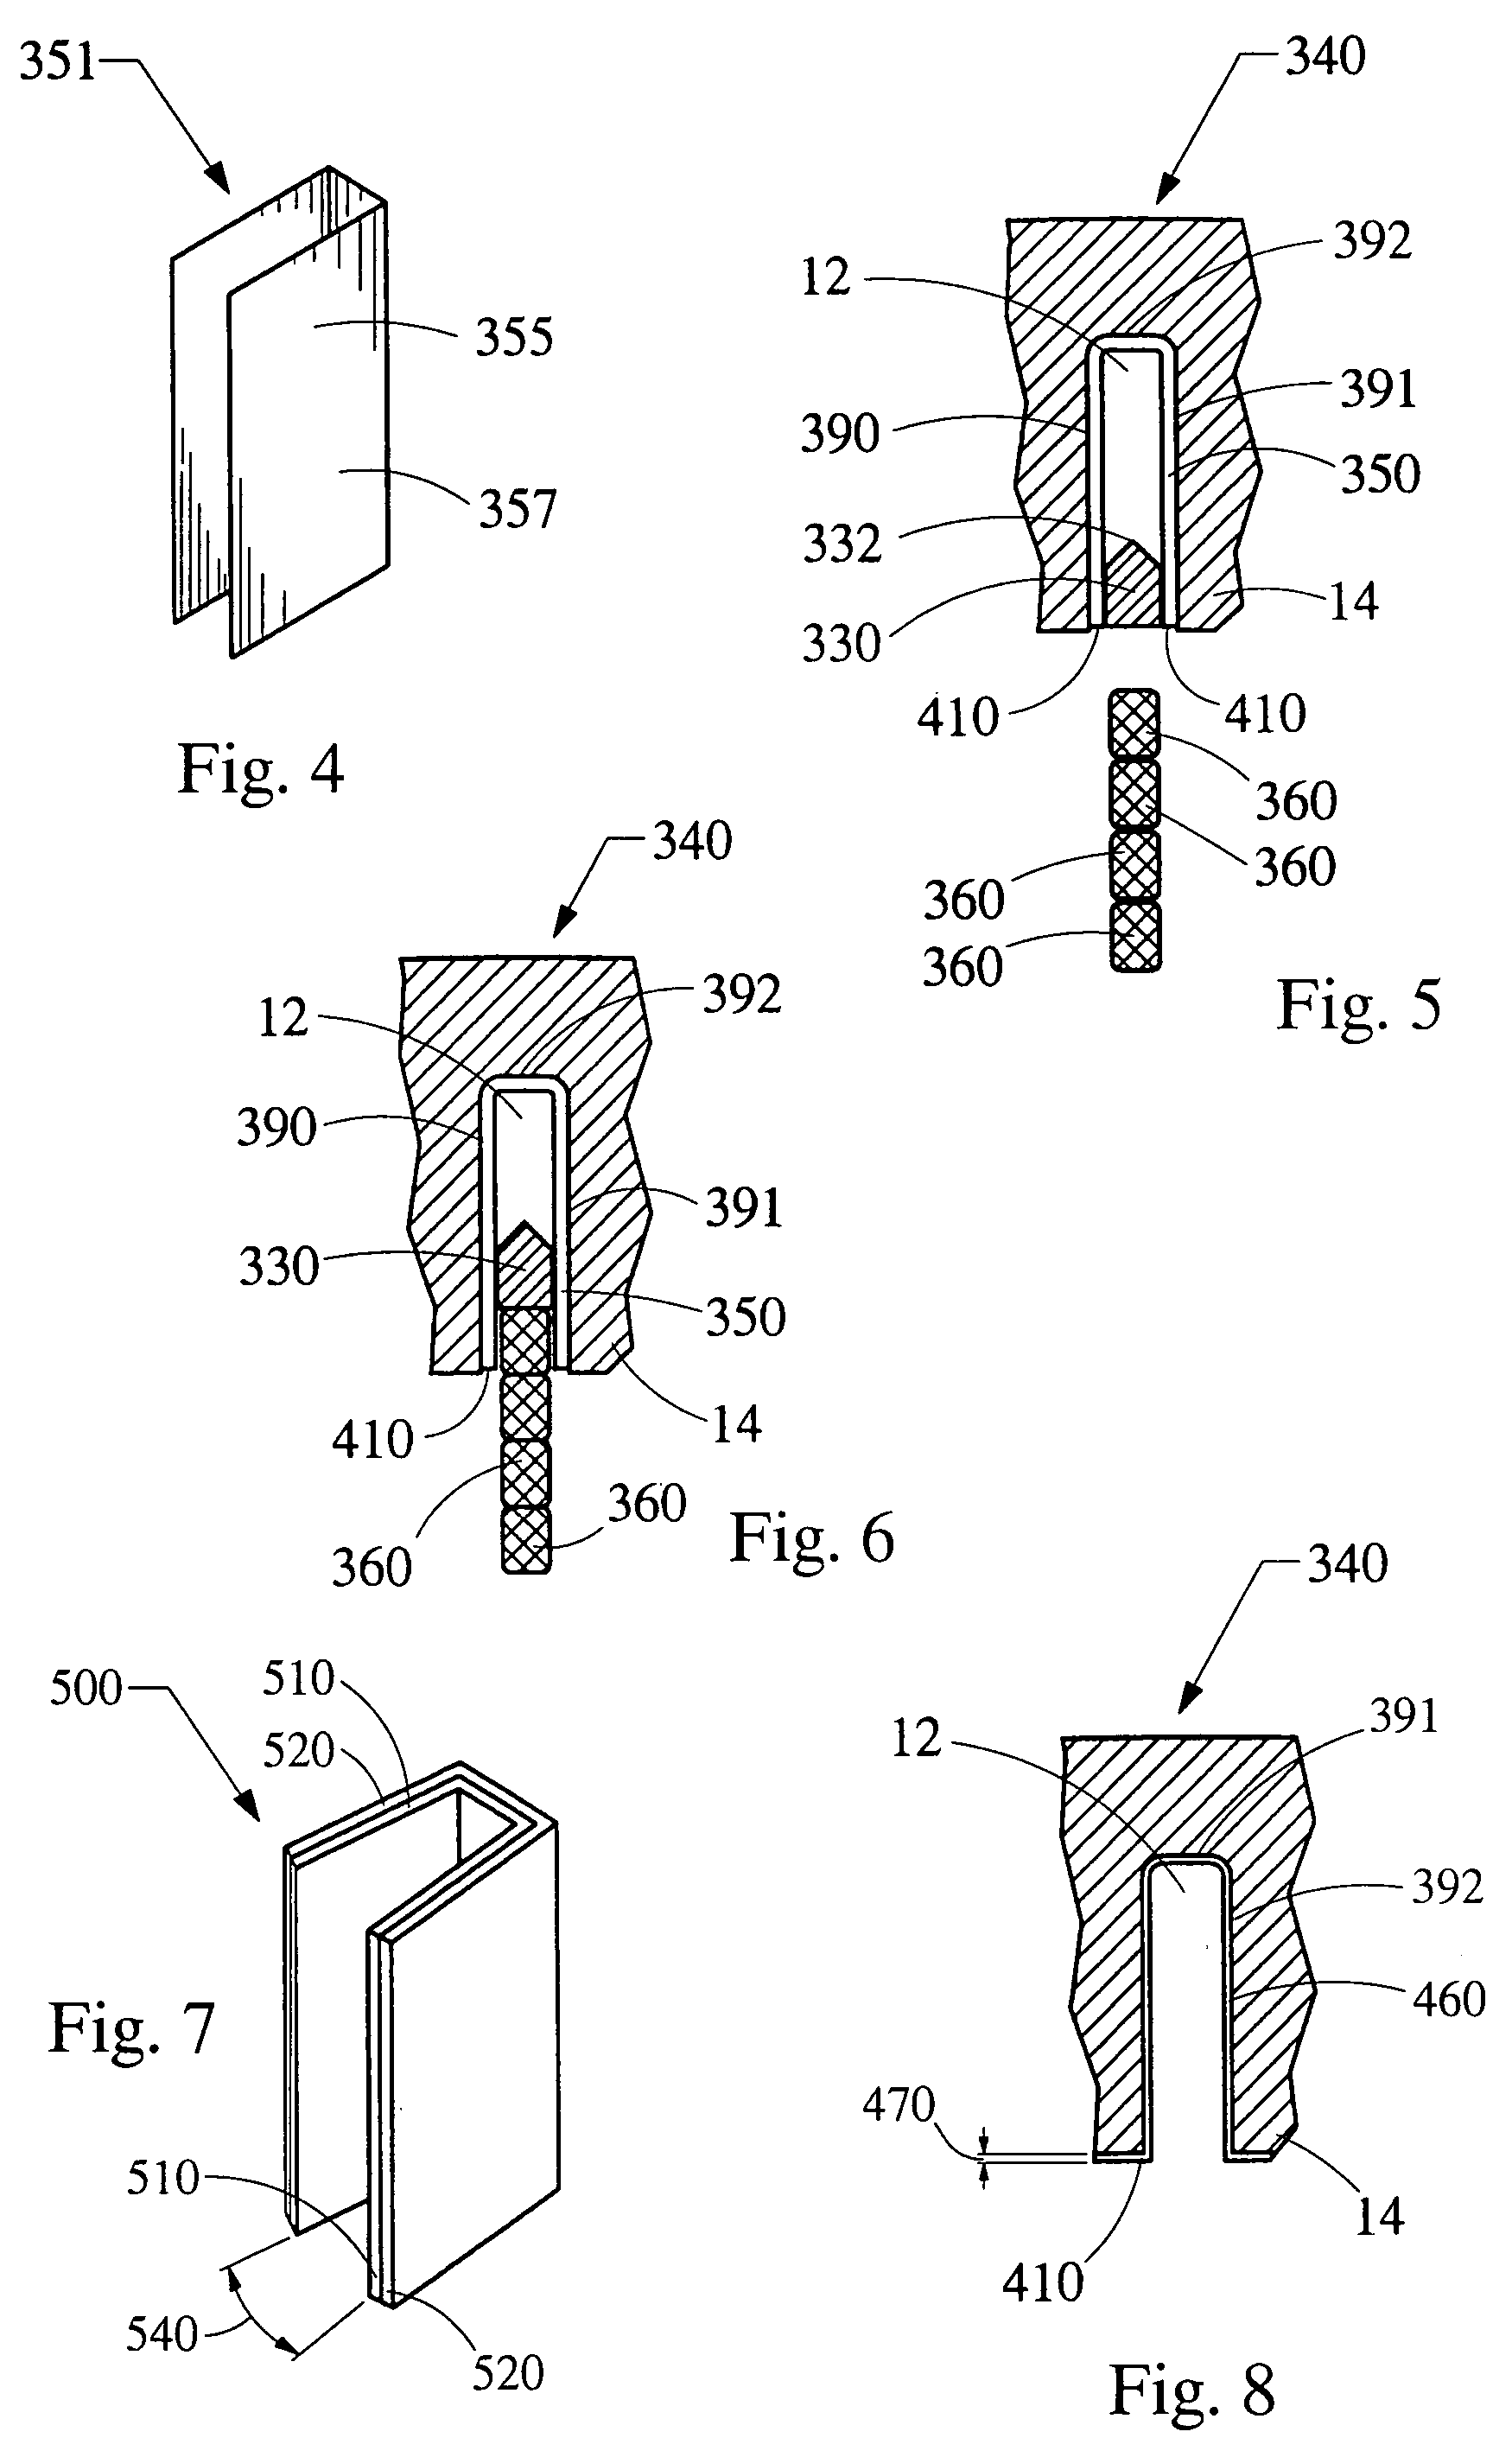 Stator of a rotary electric machine having secured core slot insulators